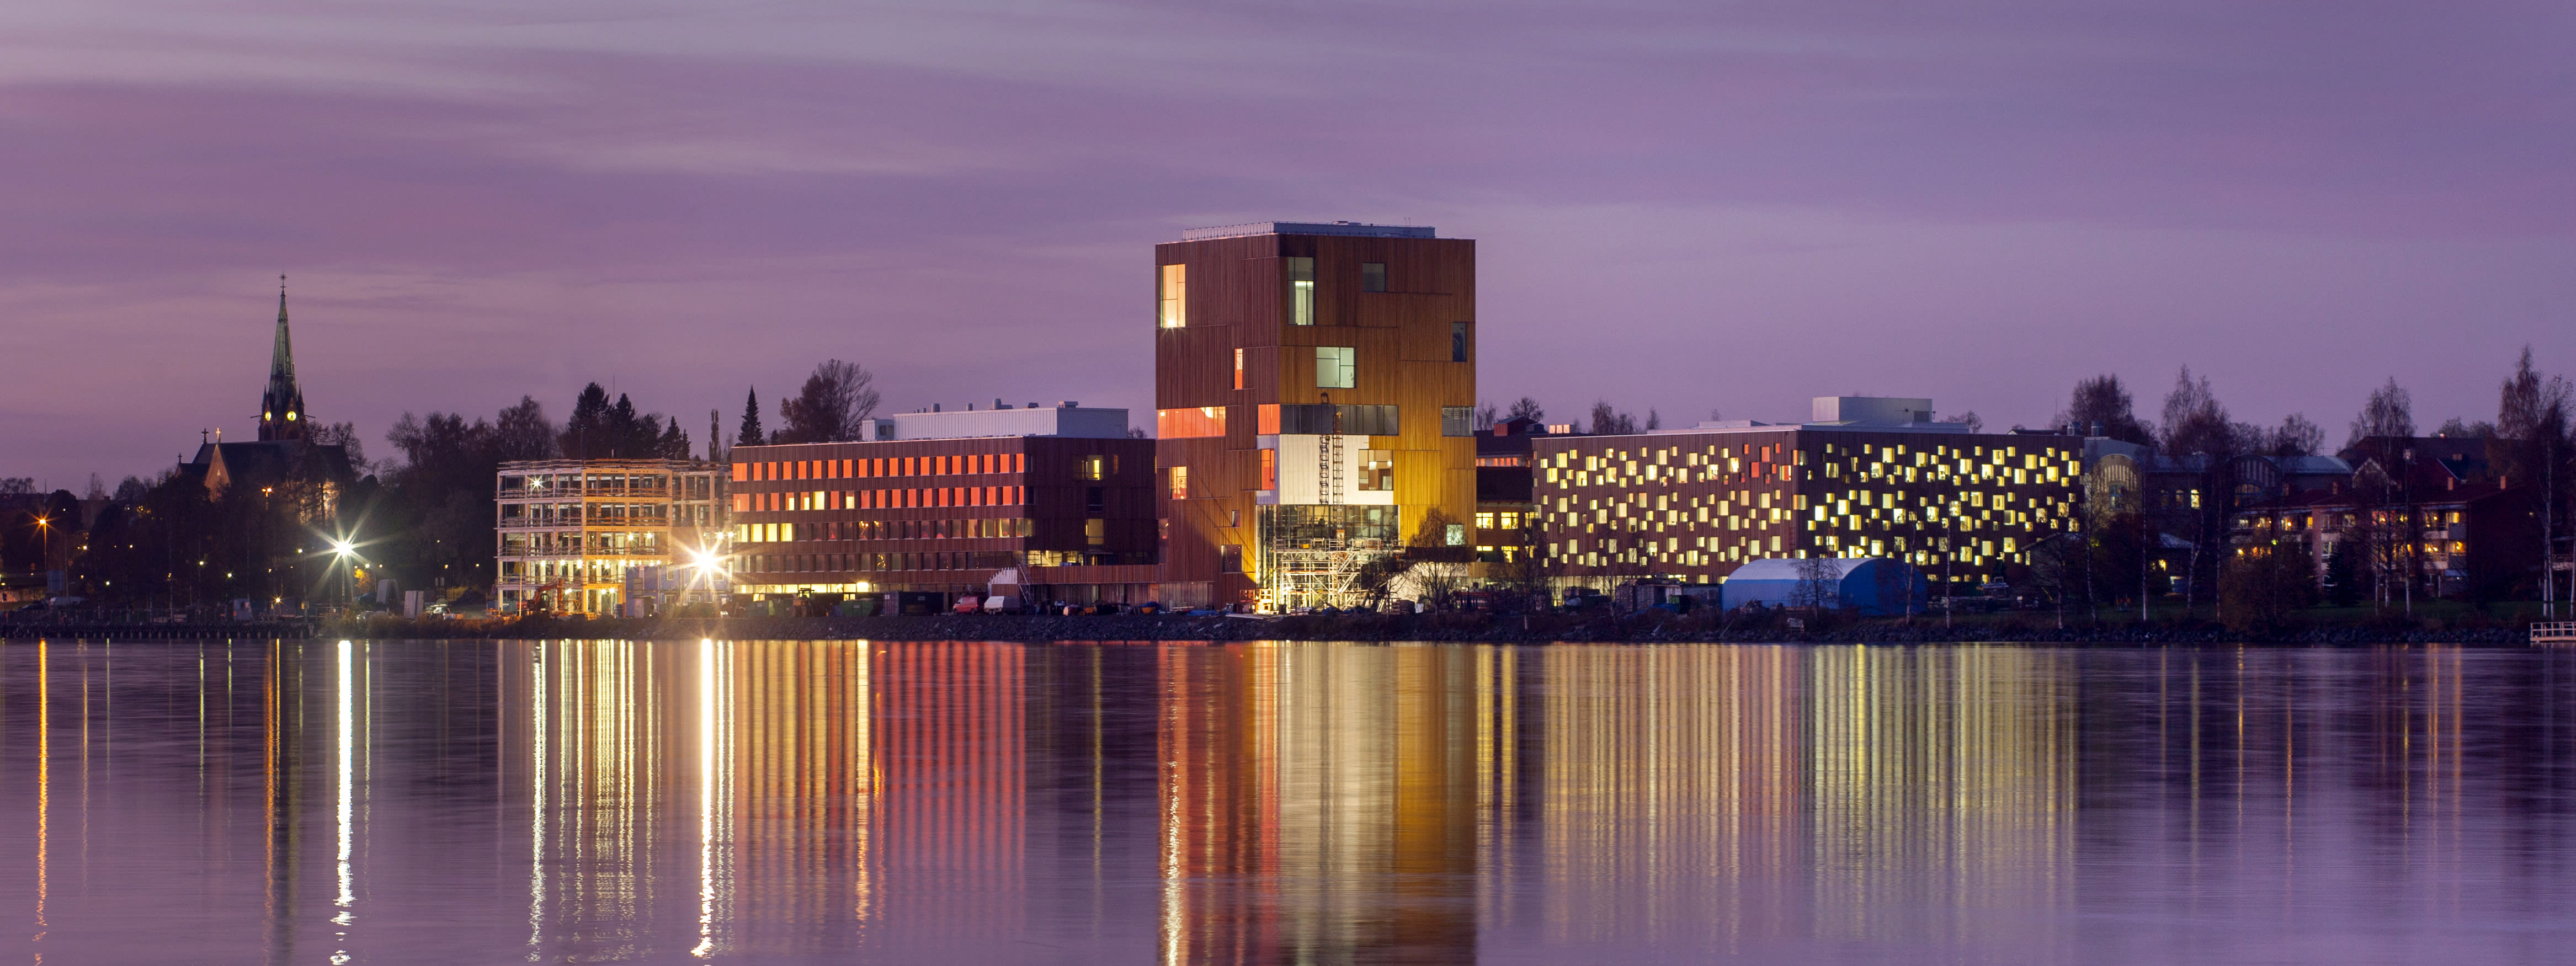 Umeå University - wide 6